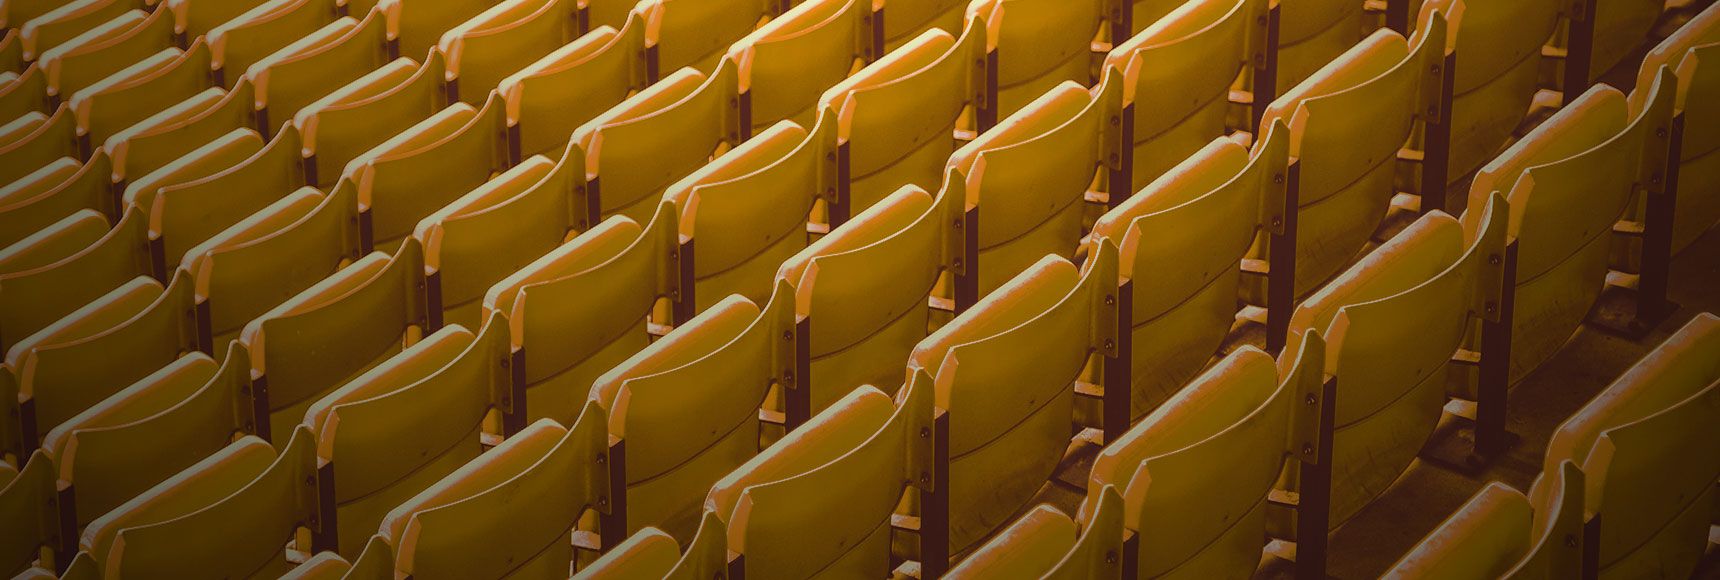 An abstract shot of stadium seats